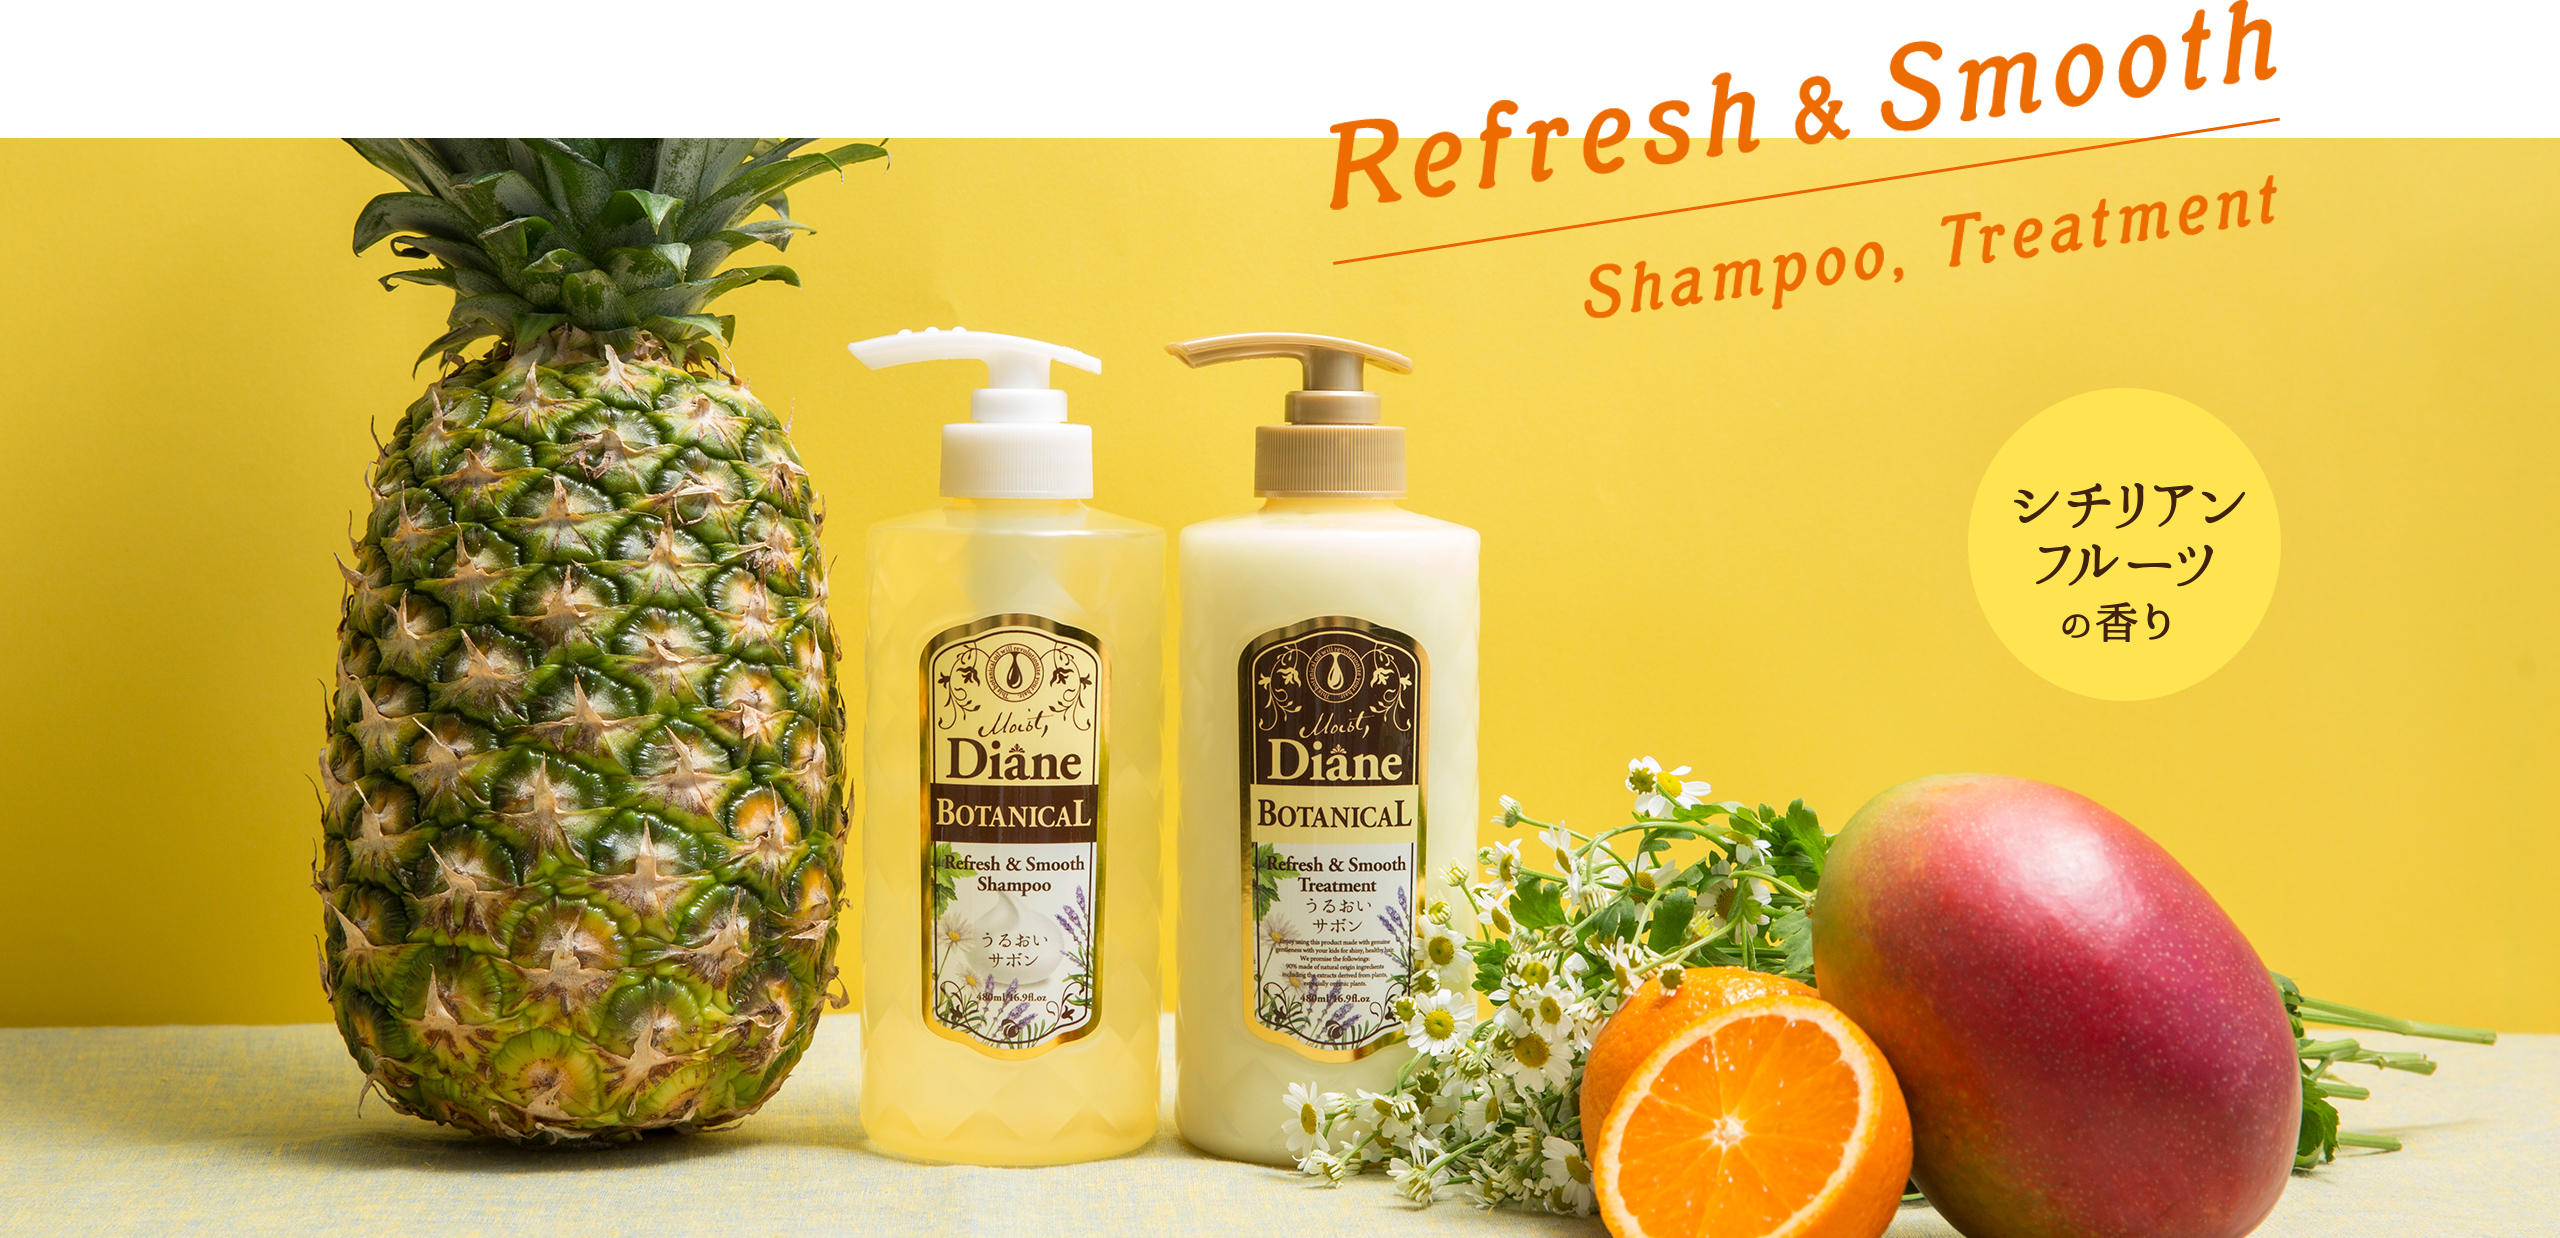 Refresh & Smooth Shampoo, Treatment シチリアンフルーツの香り